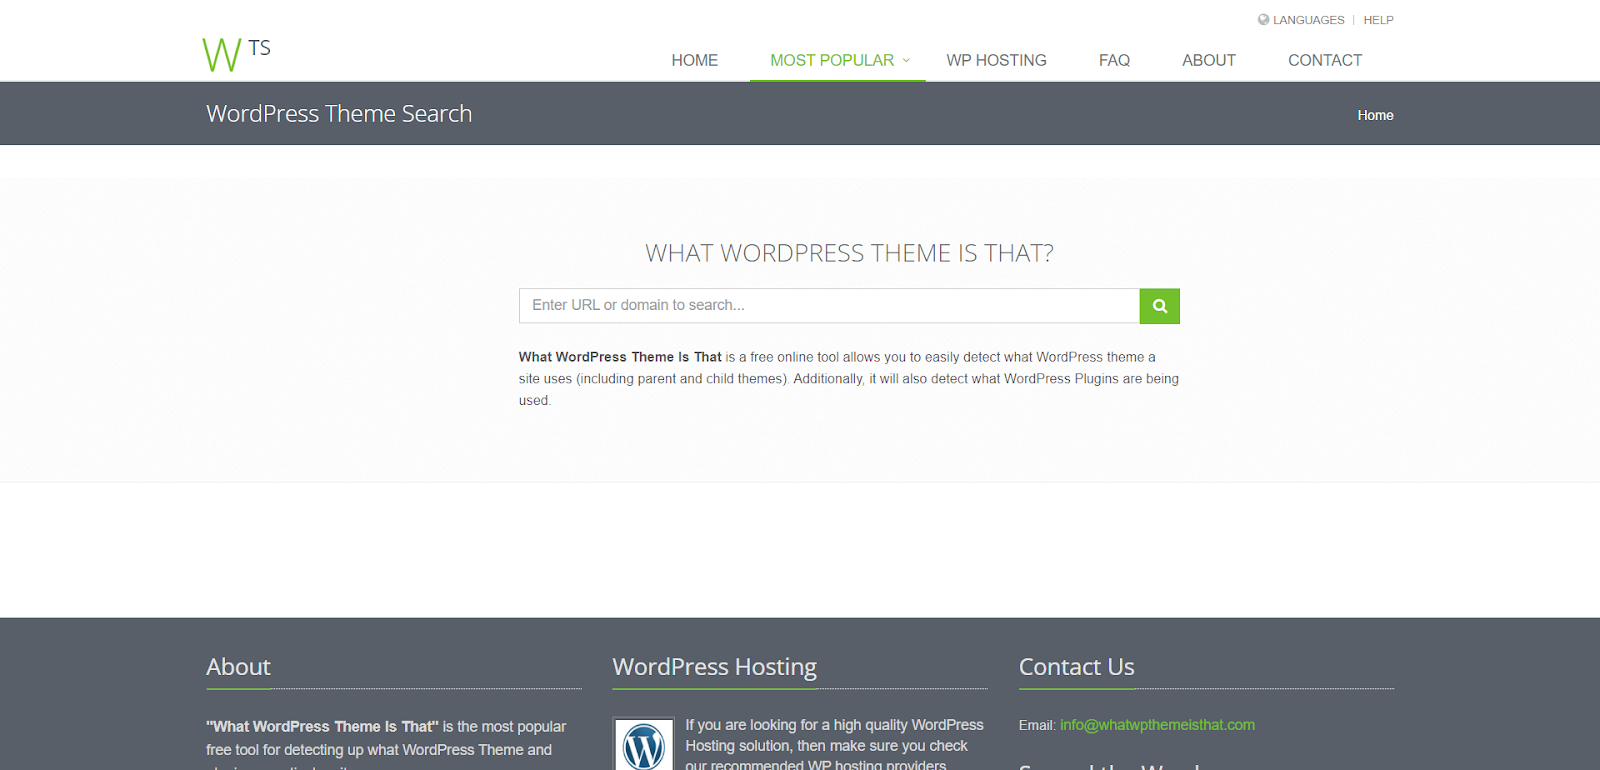 What WordPress Theme Is That?